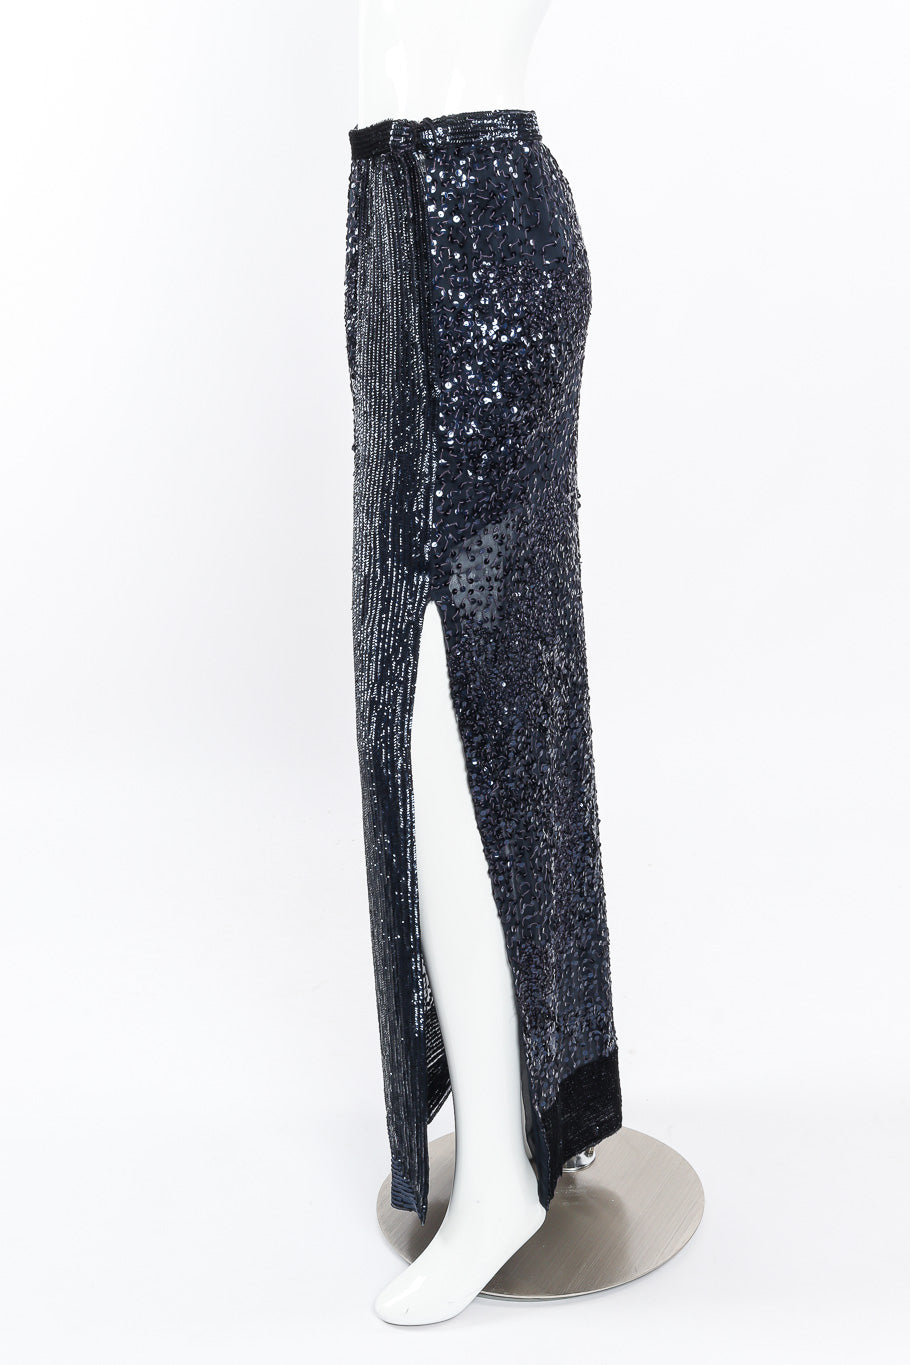 Midnight sequin skirt by Gianfranco Ferre on mannequin side @recessla